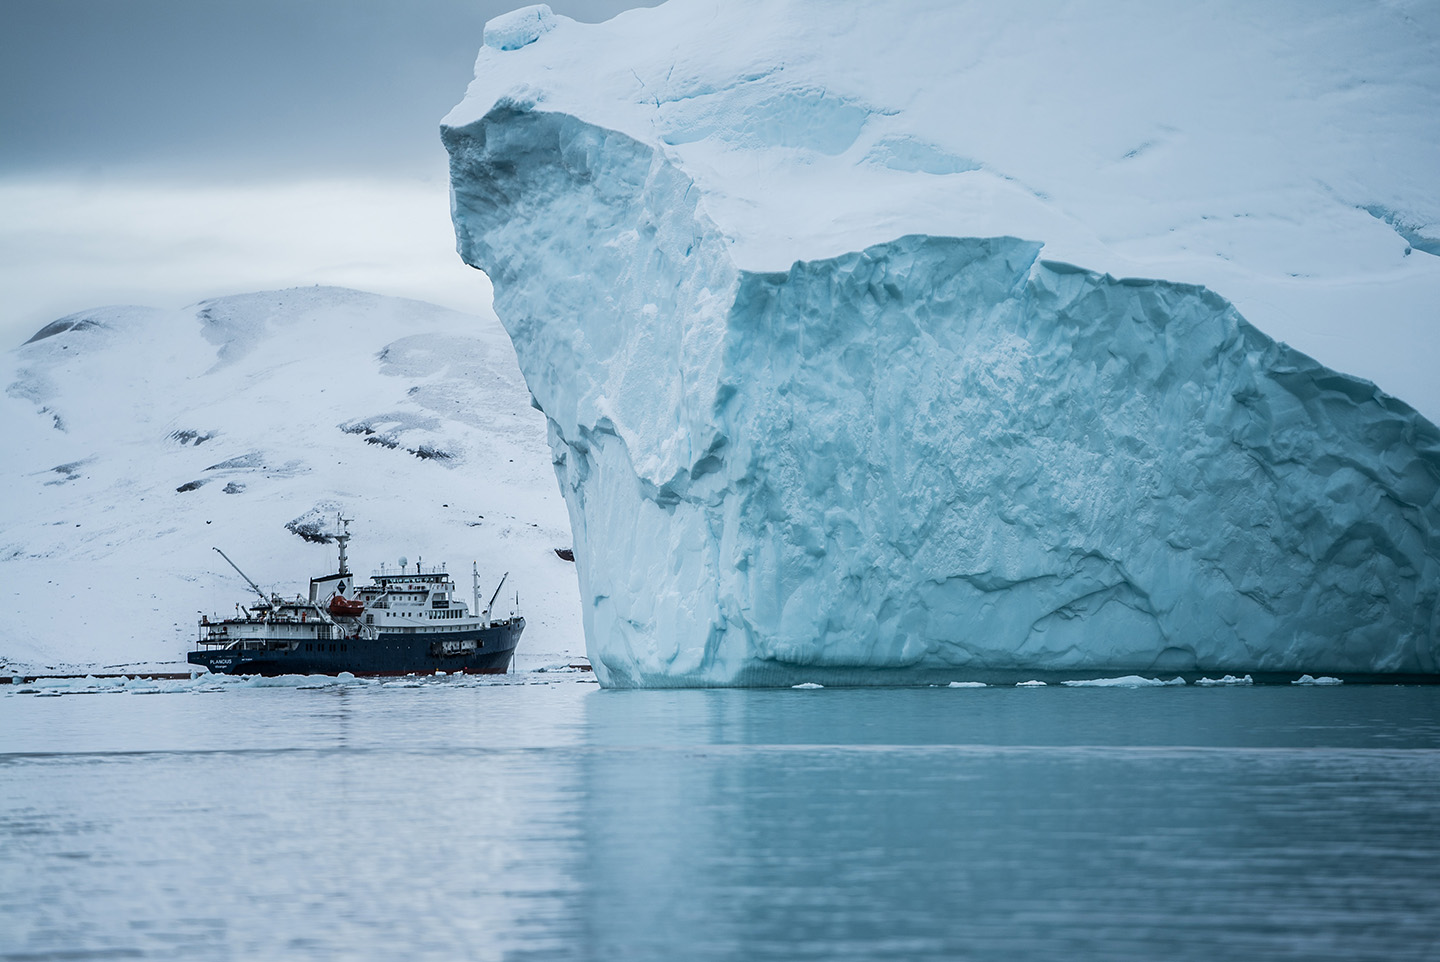 A vessel passes by icebergs near Greenland (Credit: Hubert Neufeld)